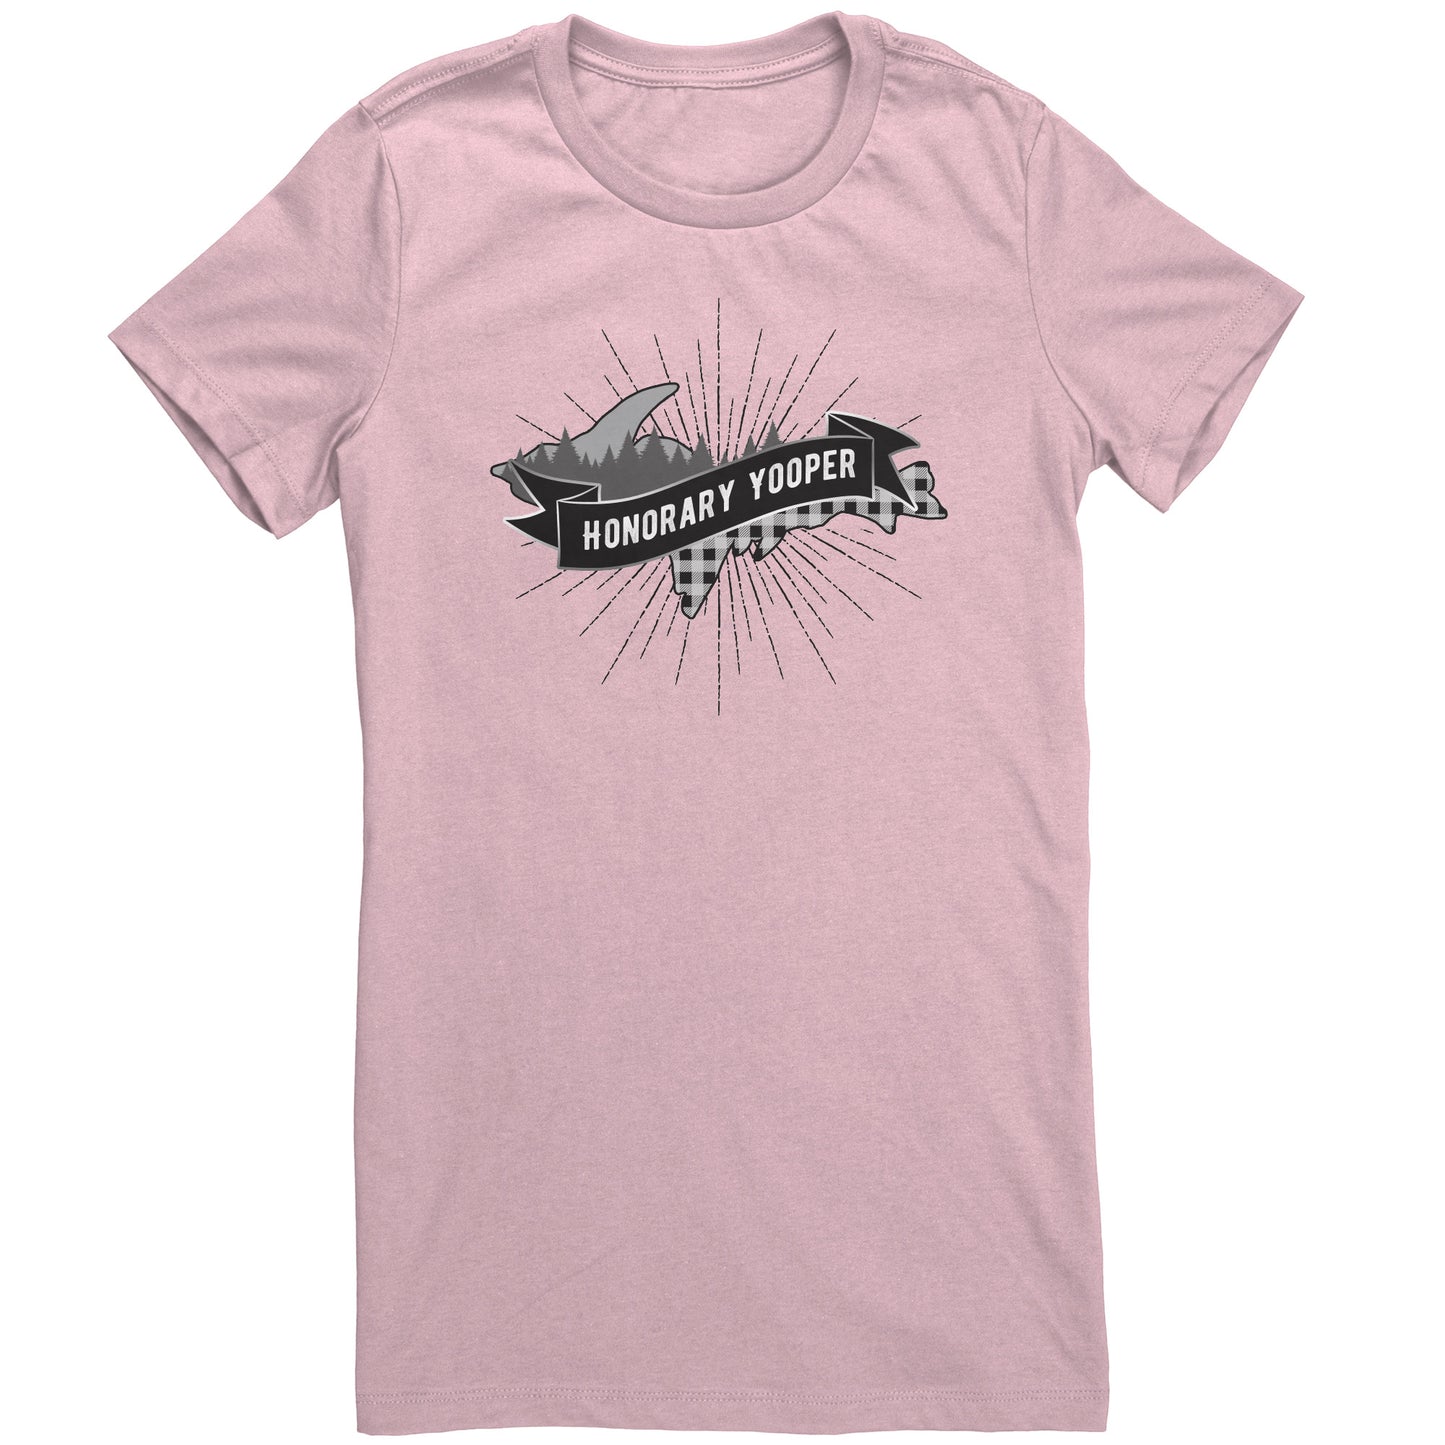 Yooper T-Shirt Women's Cut | Upper Peninsula T-shirt | Honorary Yooper Gift